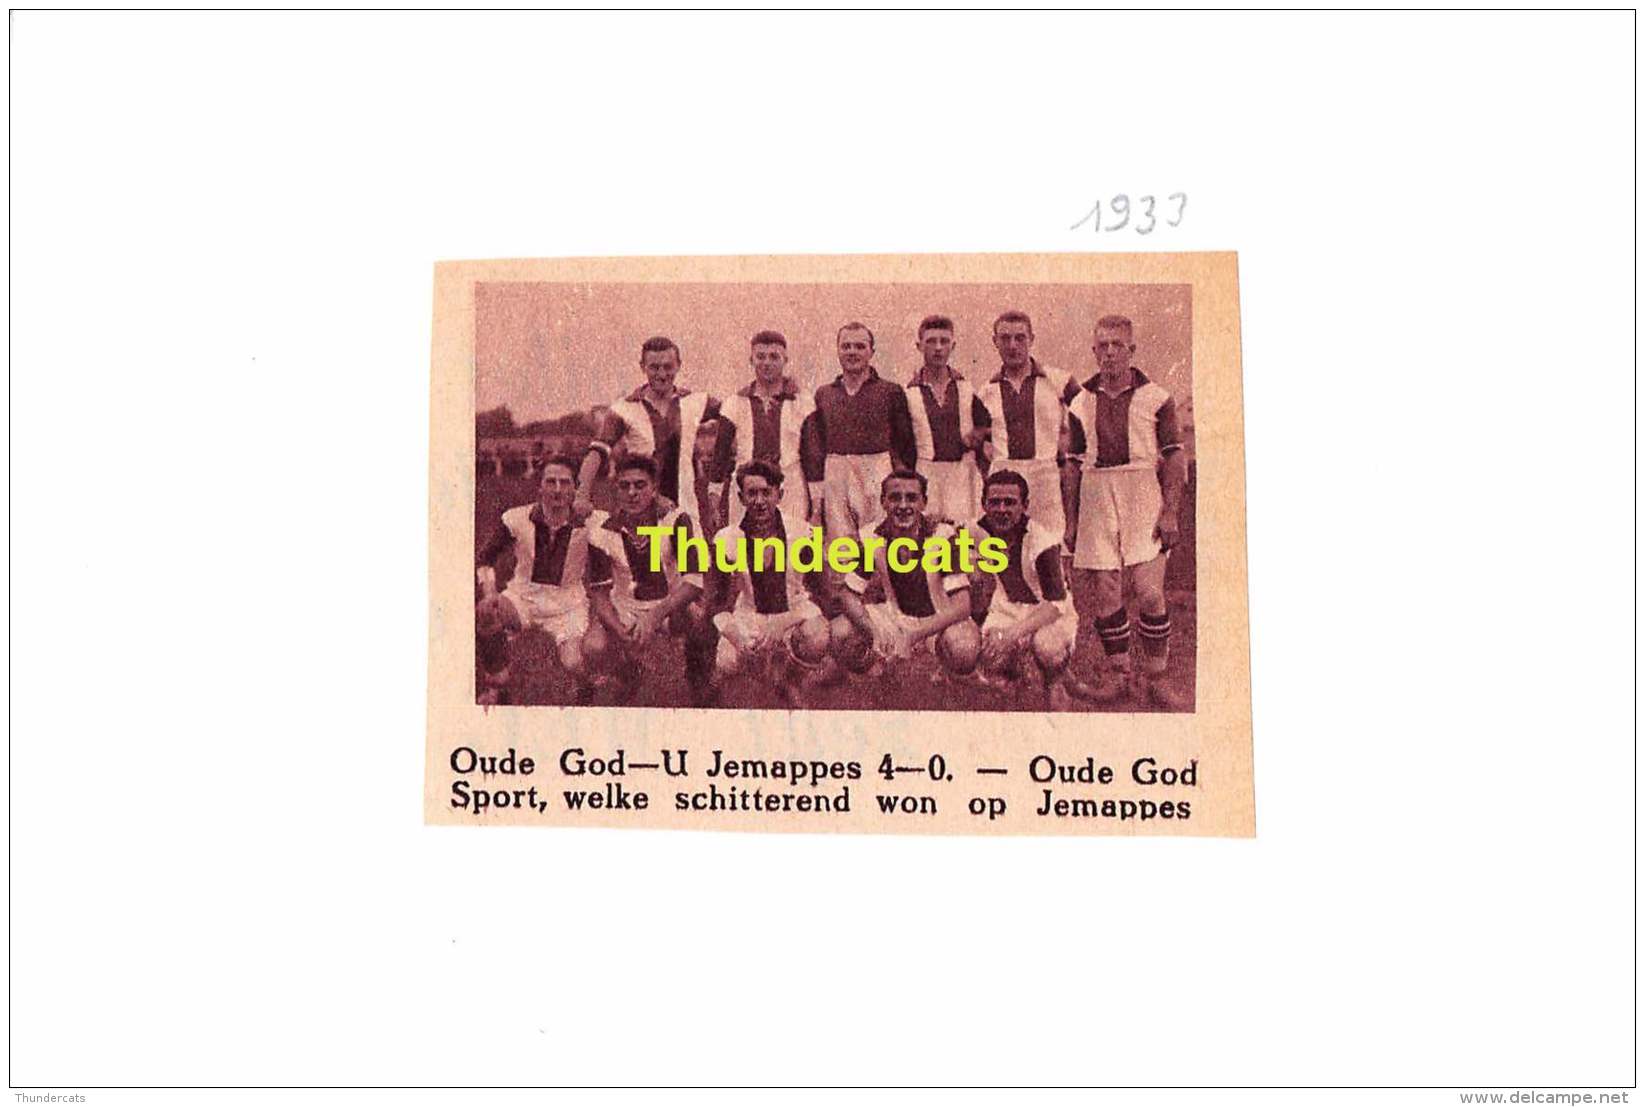 VOETBAL FOOTBALL OUDE GOD MORTSEL U JEMAPPES 1933 ** KNIPSEL ** COUPURE ** CLIPPING - Mortsel